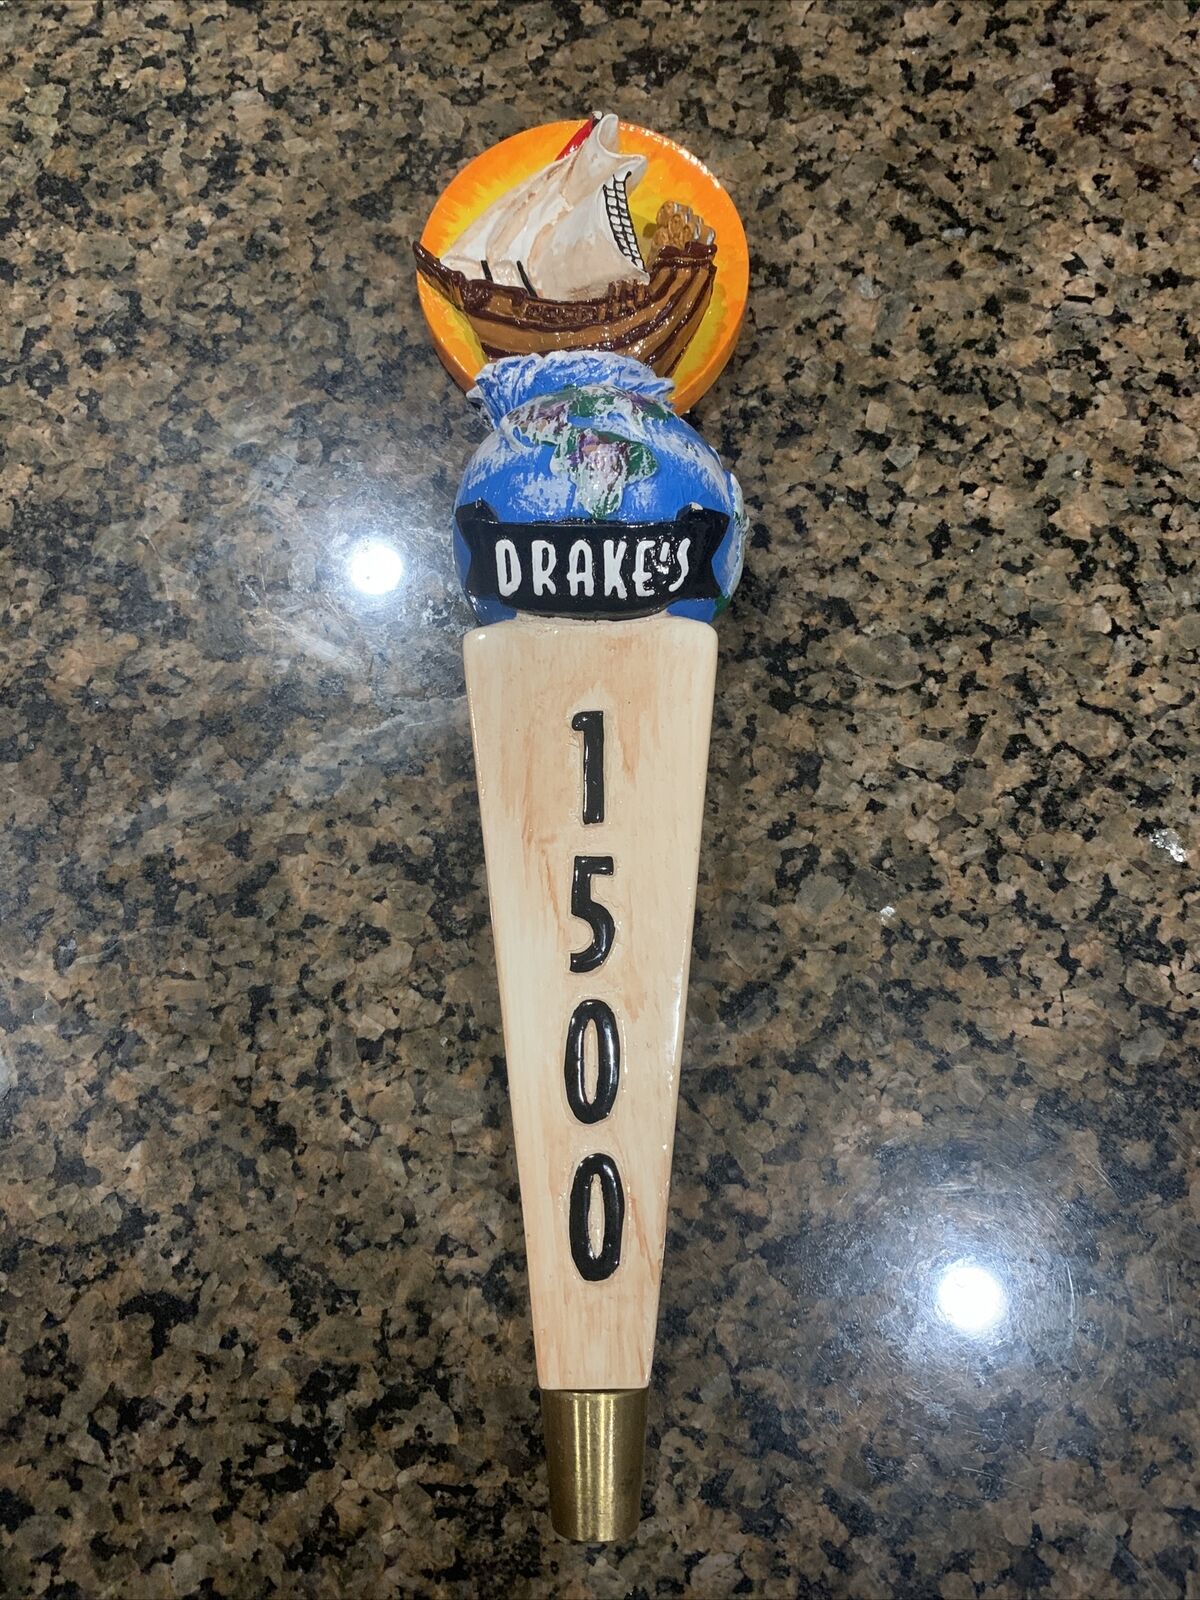 Drake’s 1500 beer tap handle ~ NICE